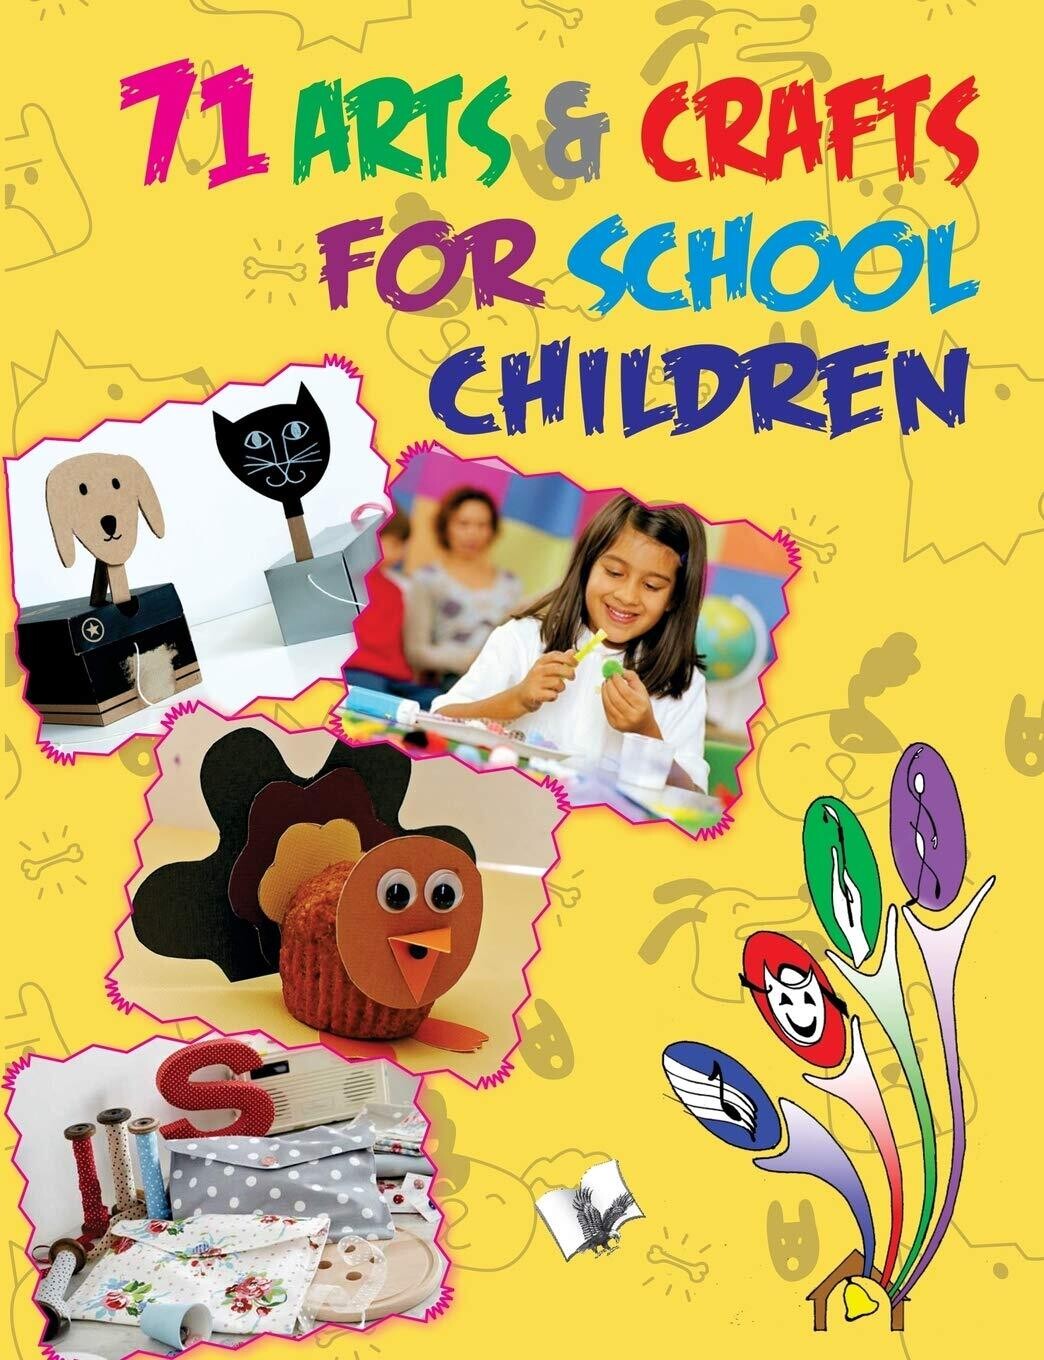 WELCOME 71 ARTS & CRAFTS FOR SCHOOL CHILDREN